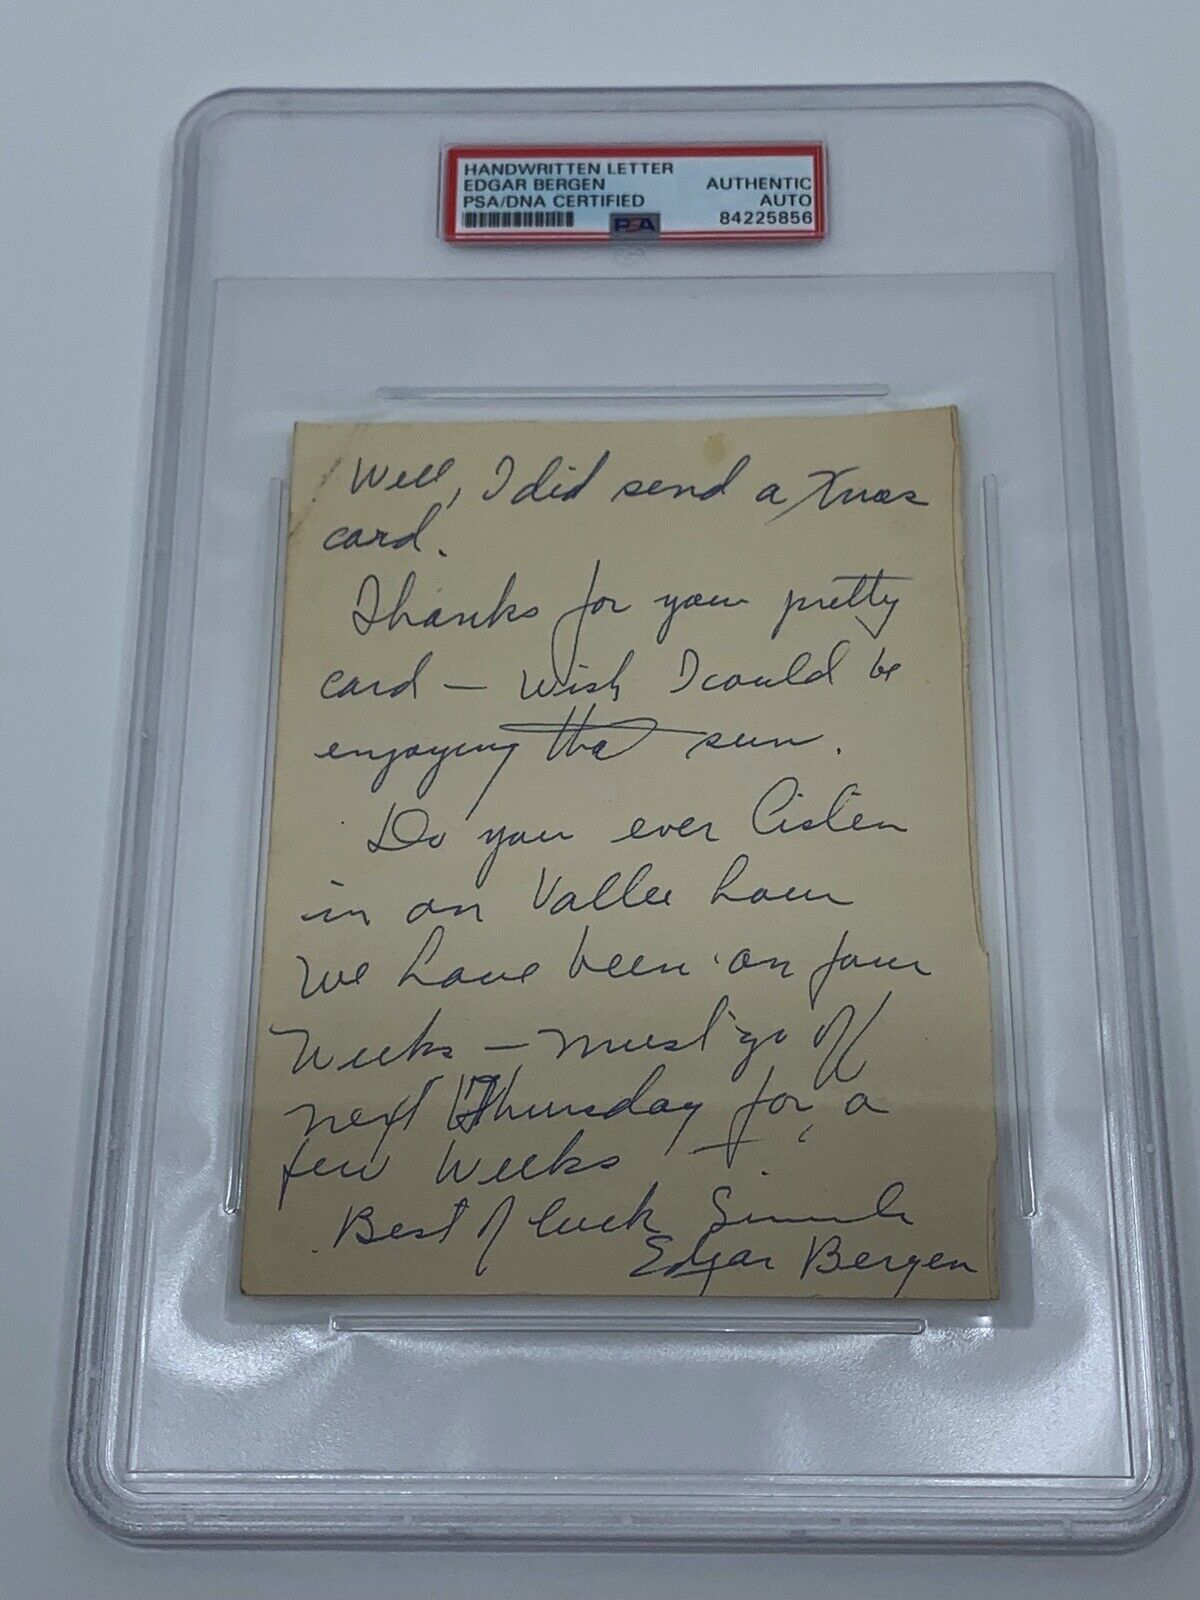 Edgar Bergen Actor Comedian Signed Autograph Handwritten Letter PSA DNA j2f1c